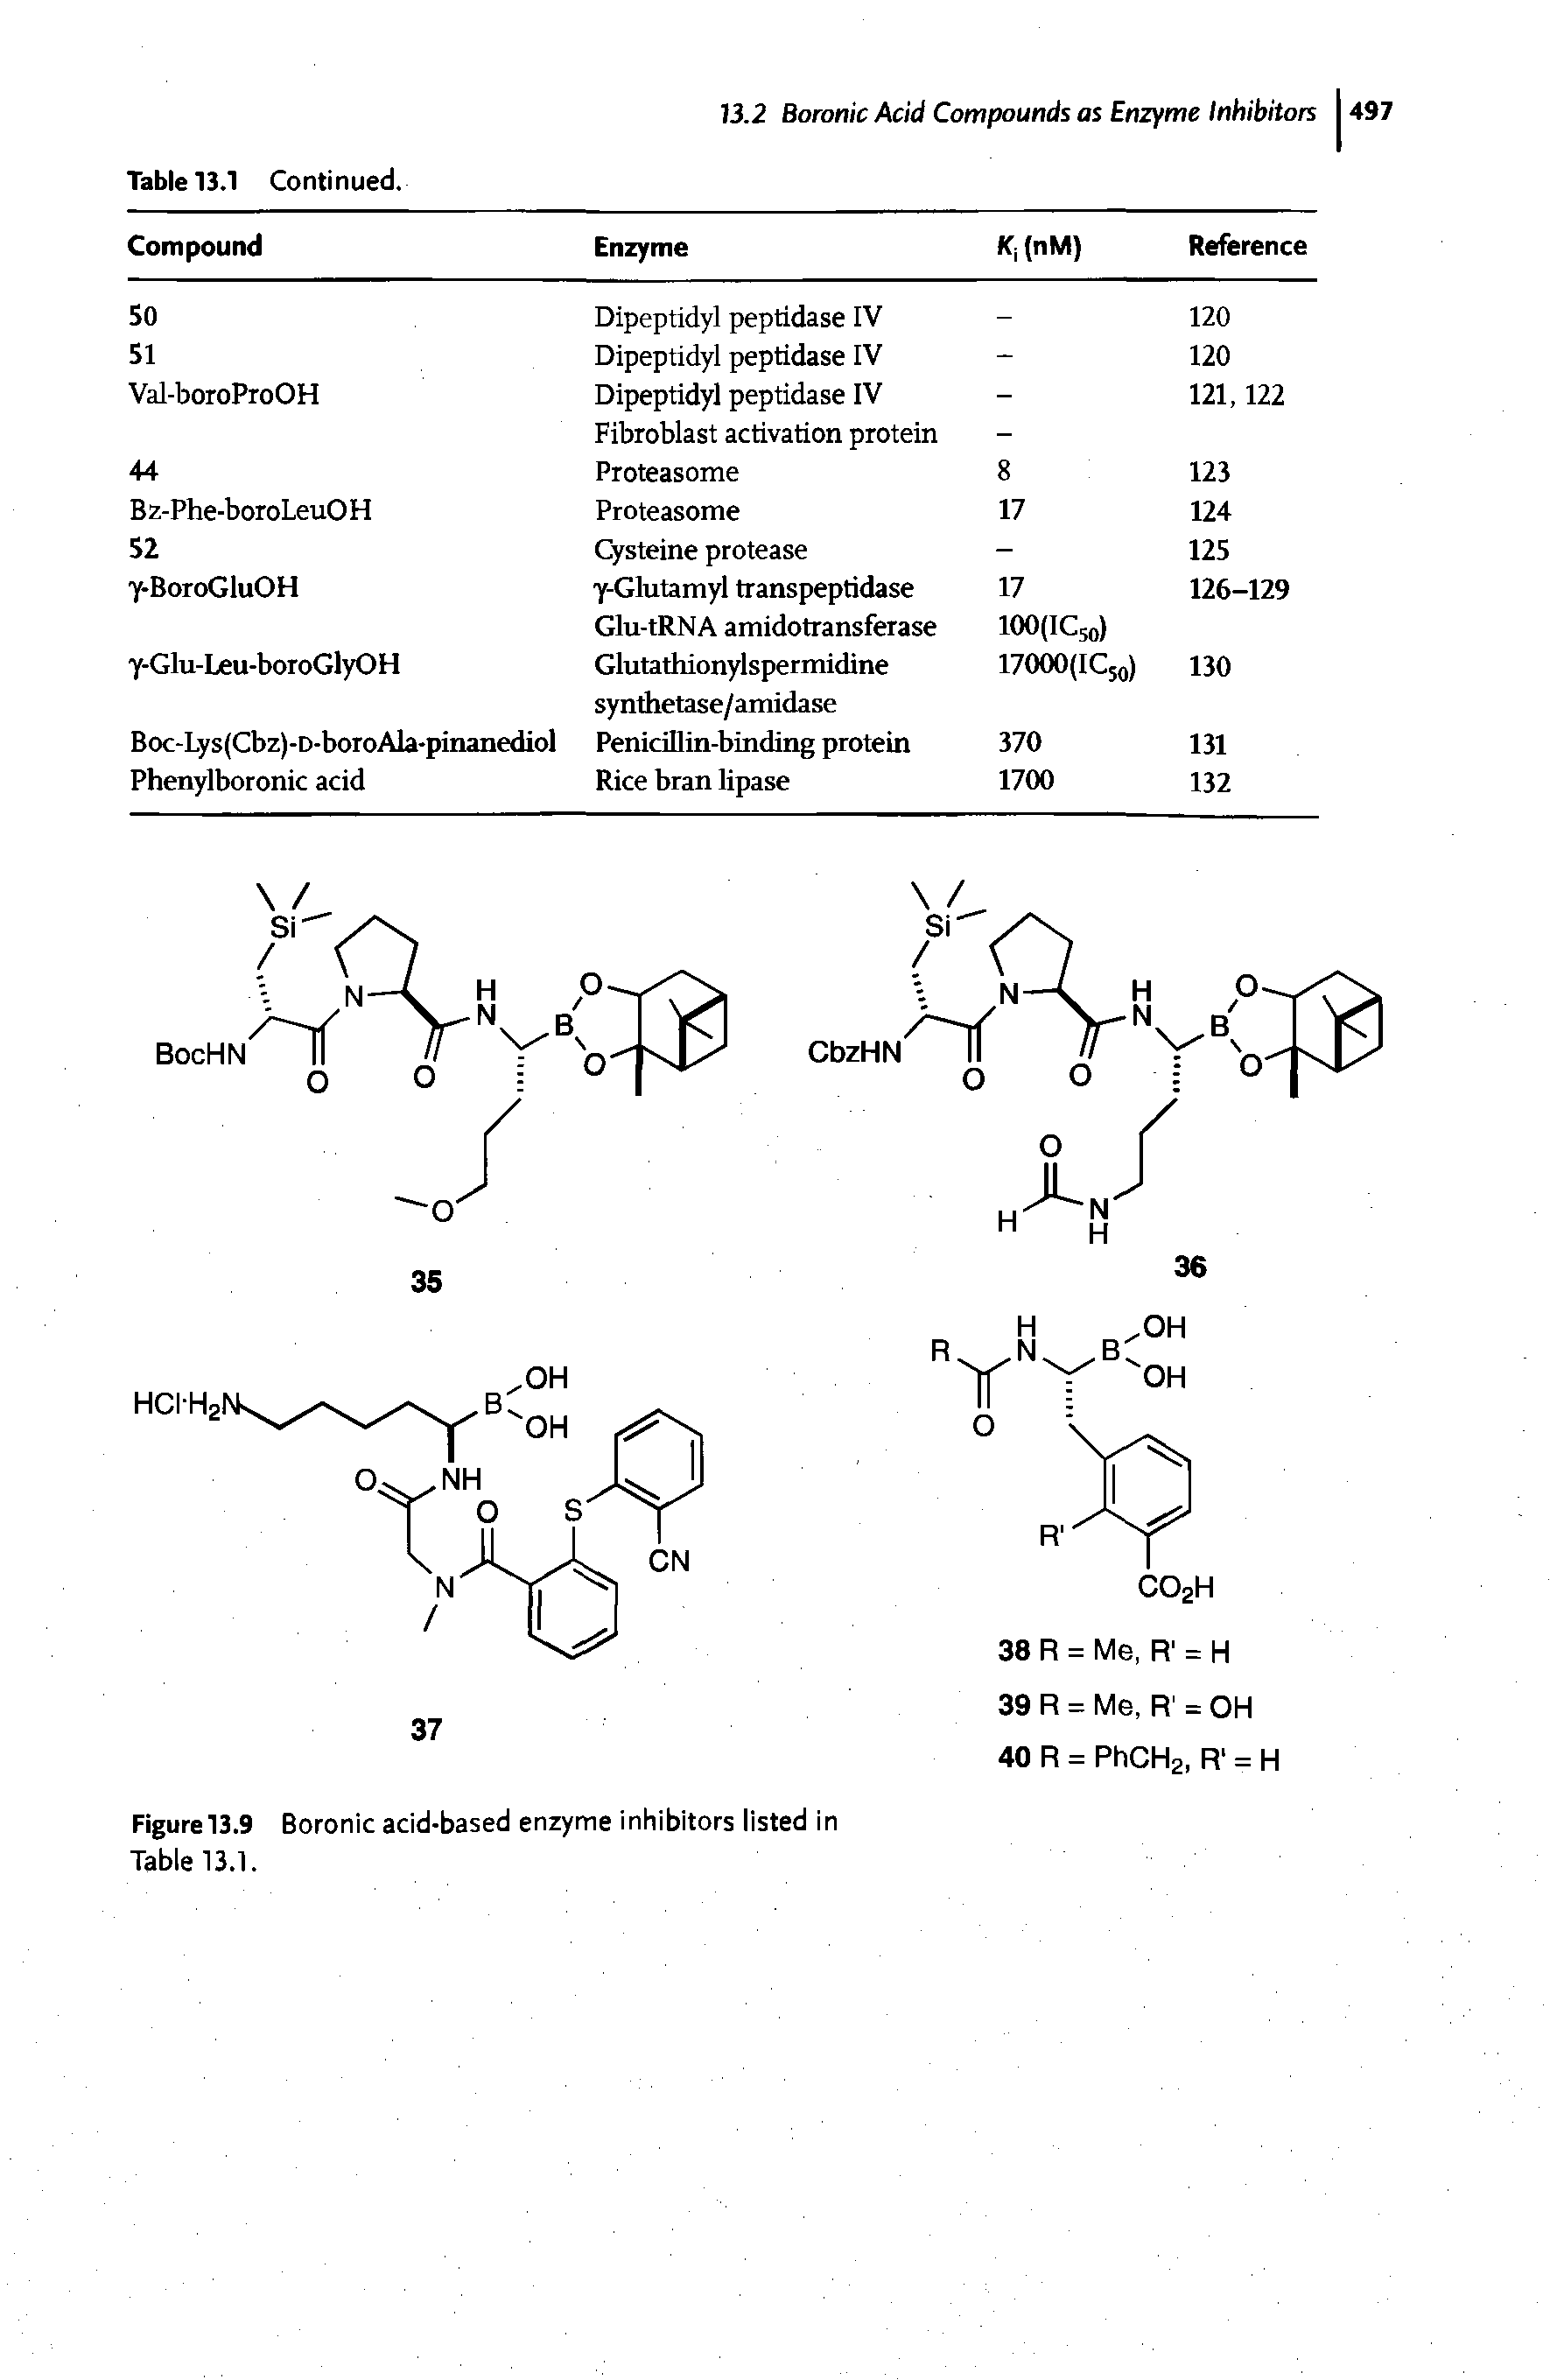 Figure 13.9 Boronic acid-based enzyme inhibitors listed in Table 13.1.